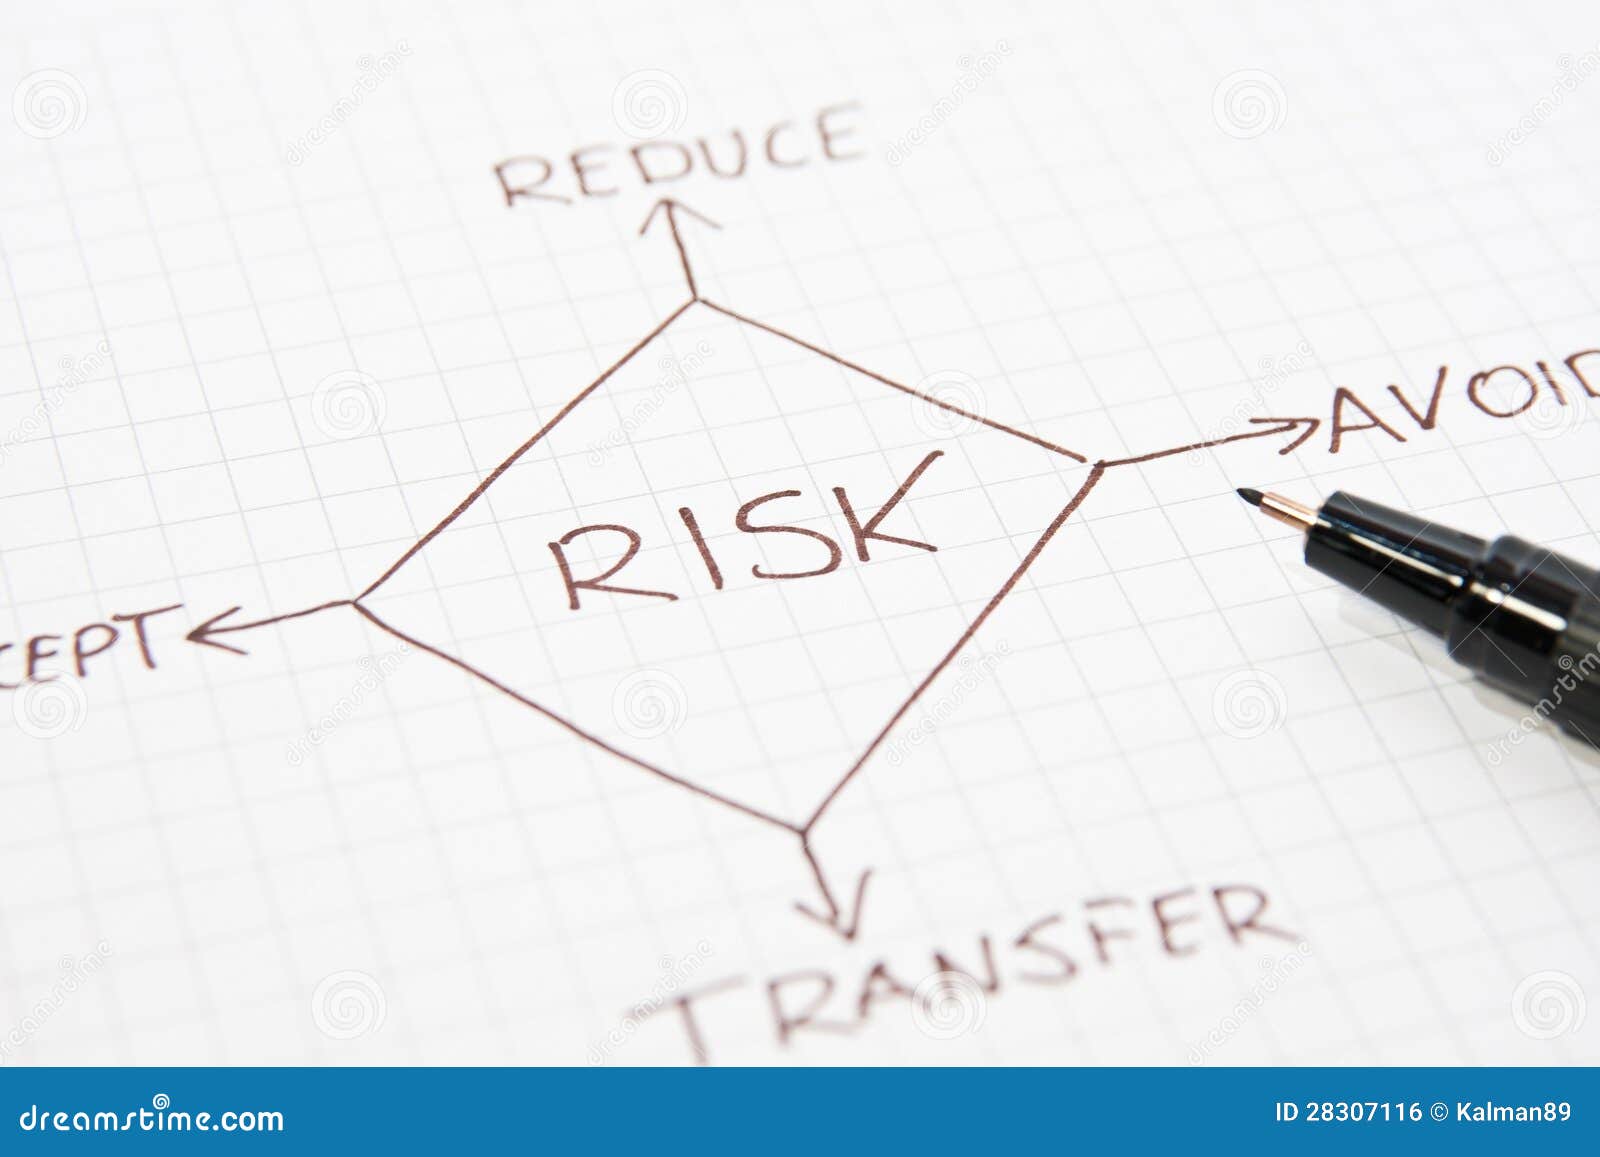 risk management diagram